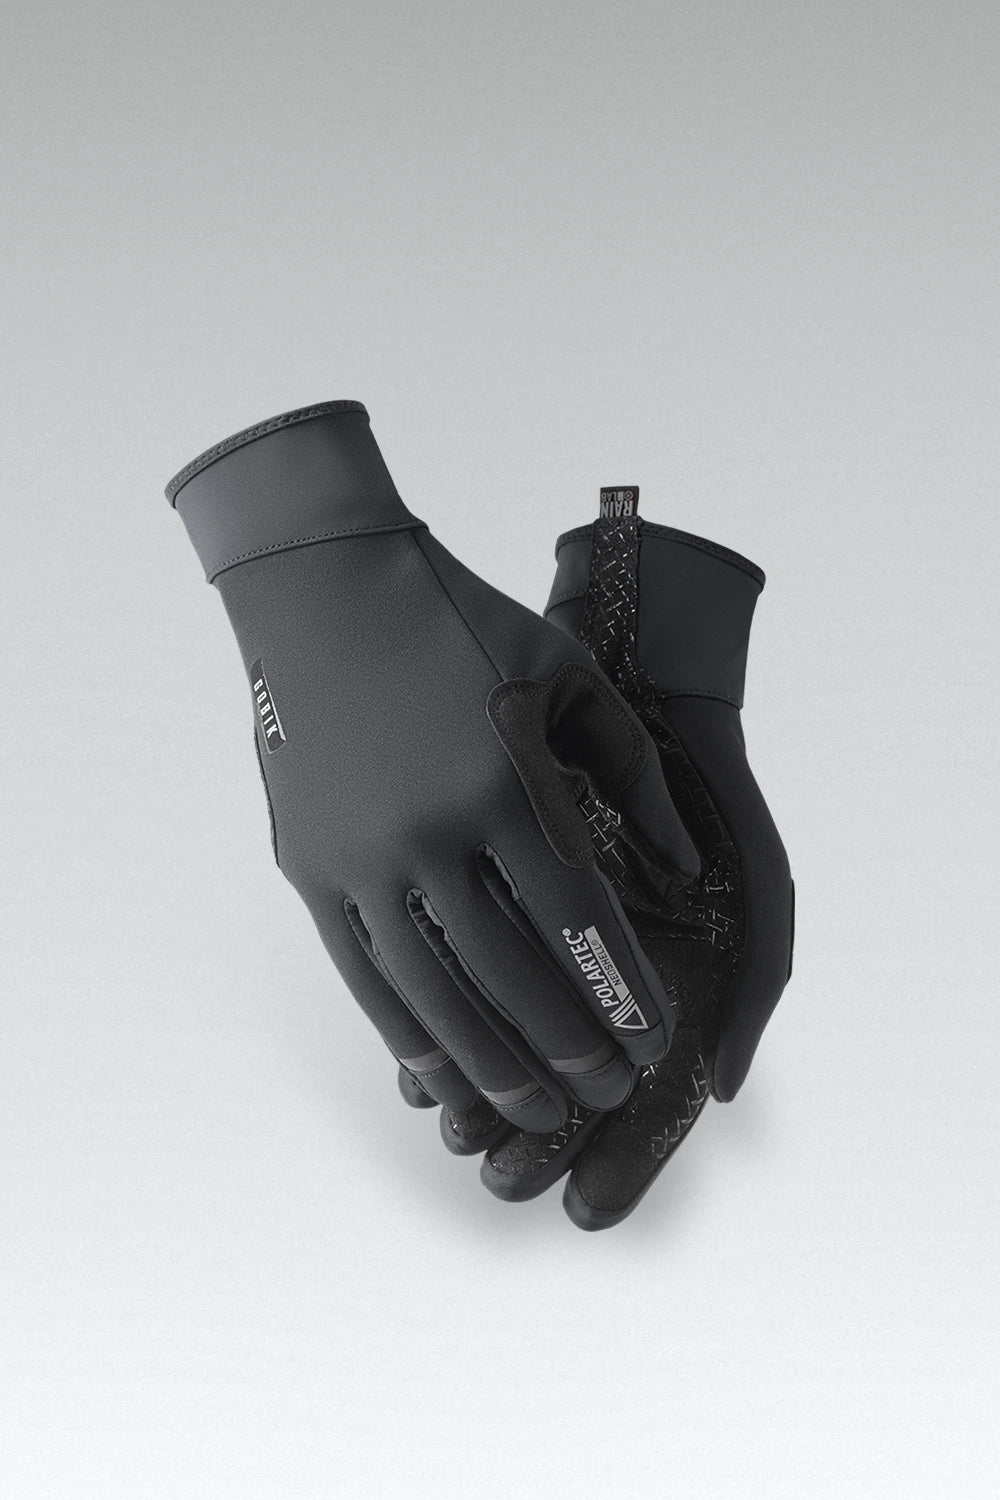 Gobik Finder True Black unisex guantes térmicos ligeros - Envío 24h